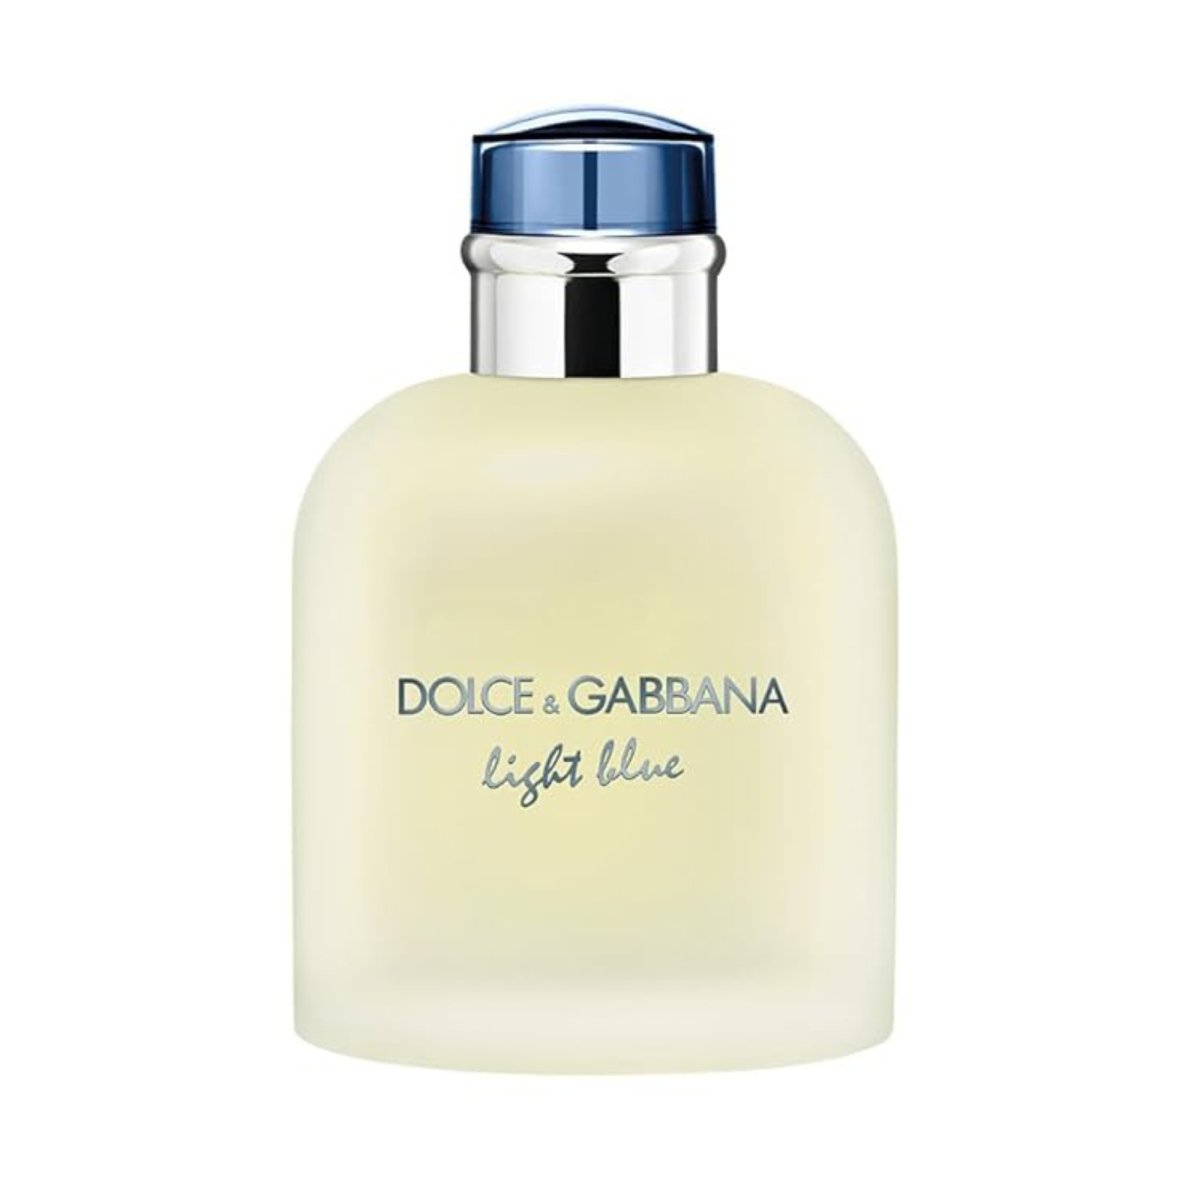 Dolce & Gabbana Men's Light Blue EDT 4.2 oz Fragrances - Perfume Headquarters - Dolce & Gabbana - 8057971180370 - Fragrance